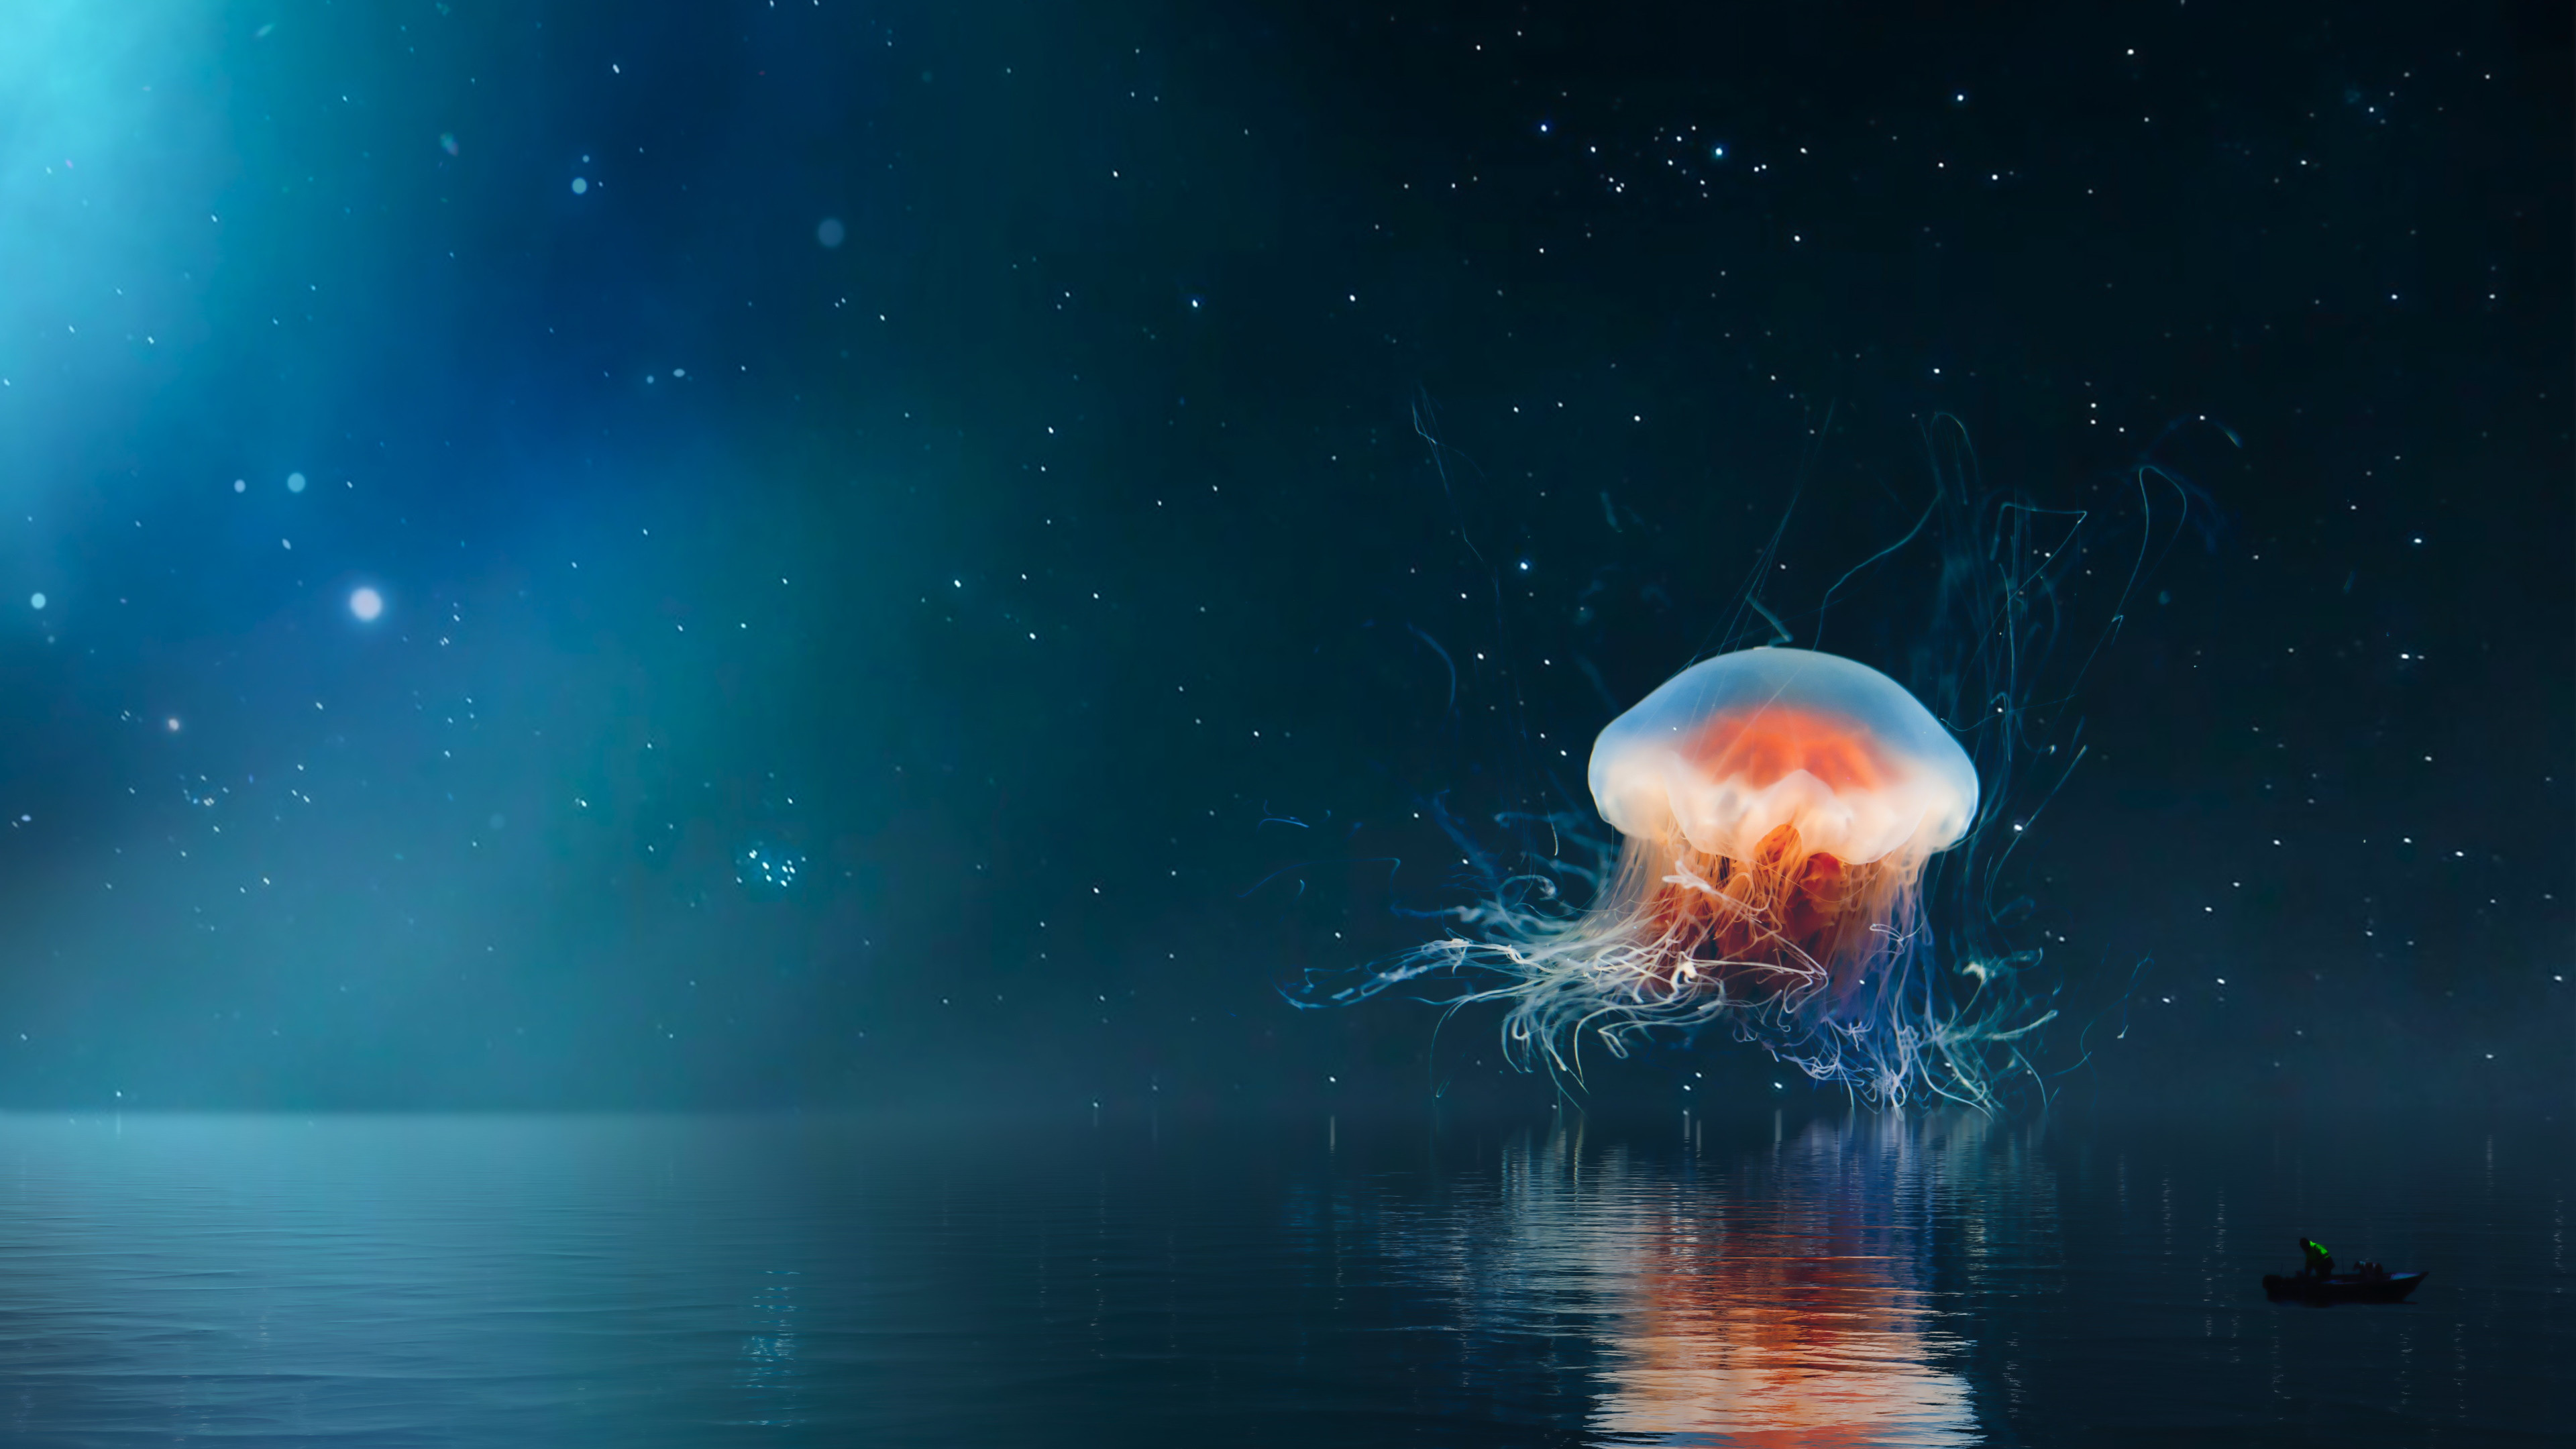 Jellyfish on the night sky wallpaper 3840x2160